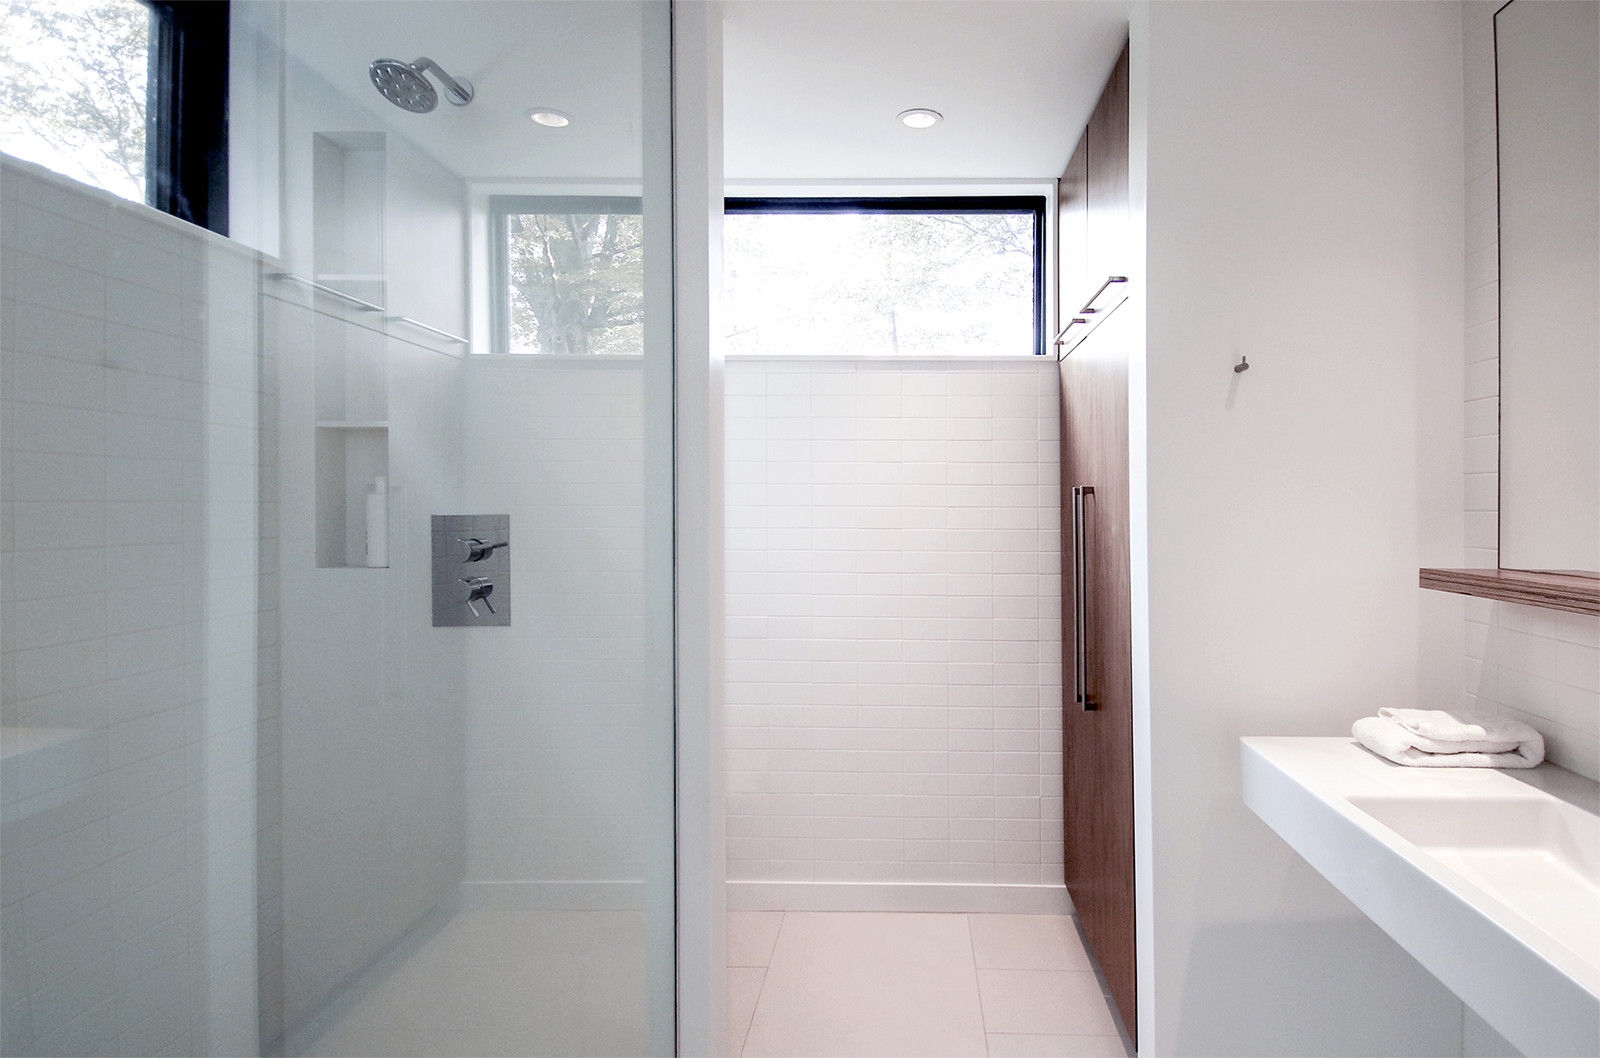 07-res4-resolution-4-architecture-modern-modular-prefab-home-cornwall-cabin-interior-bathroom.jpg